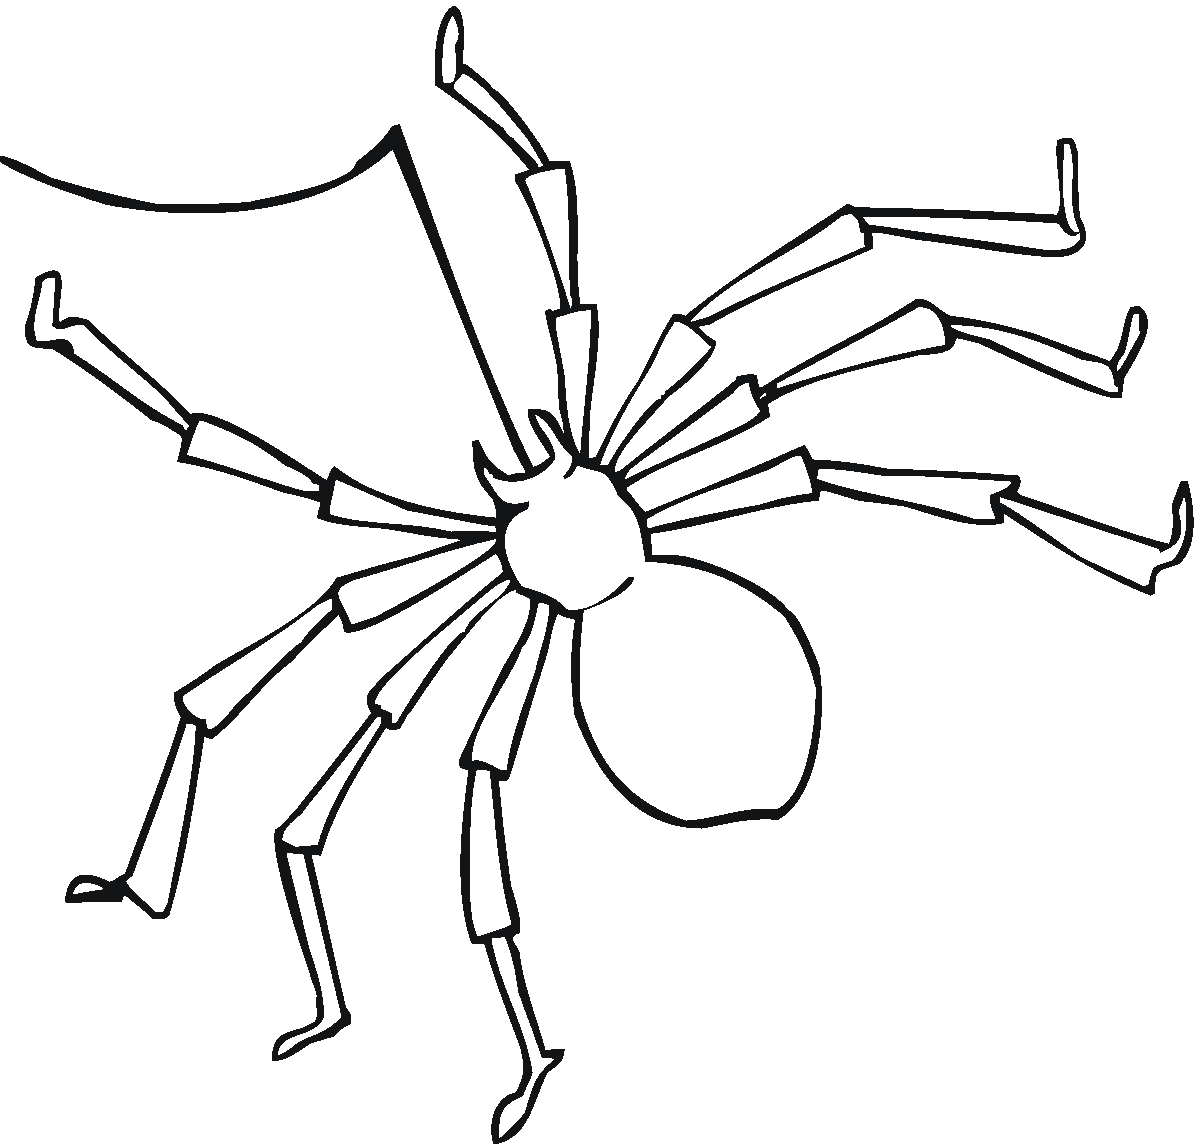 Spider Free Printable Image